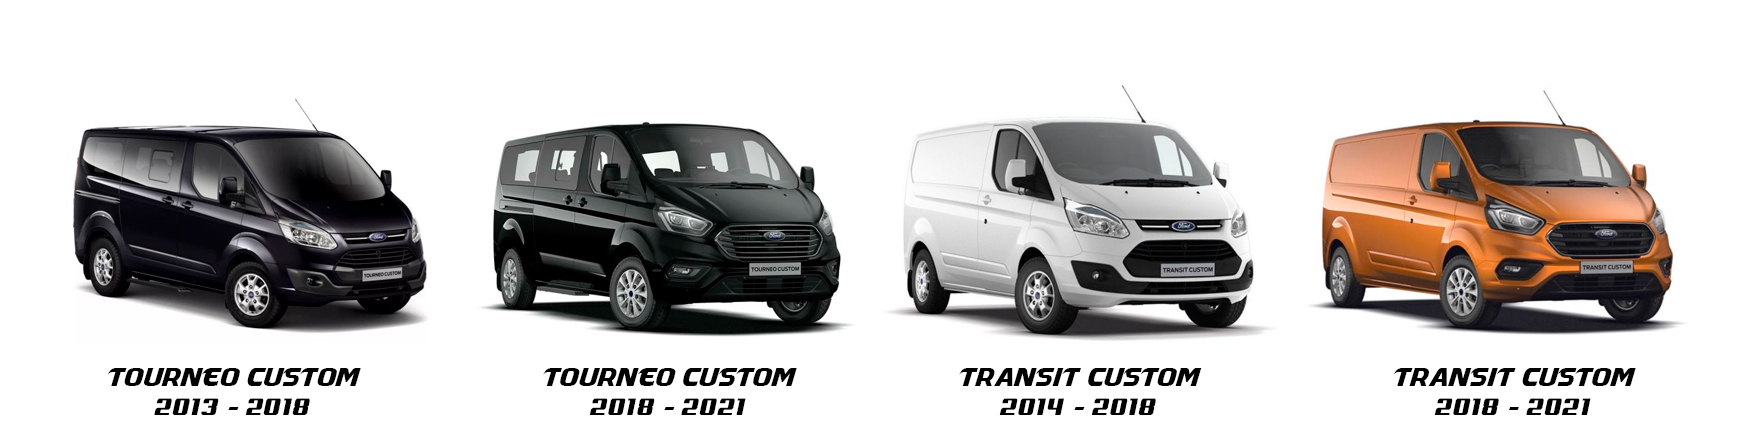 ford transit custom 2013 2014 2015 catalogo recambios online nuevos